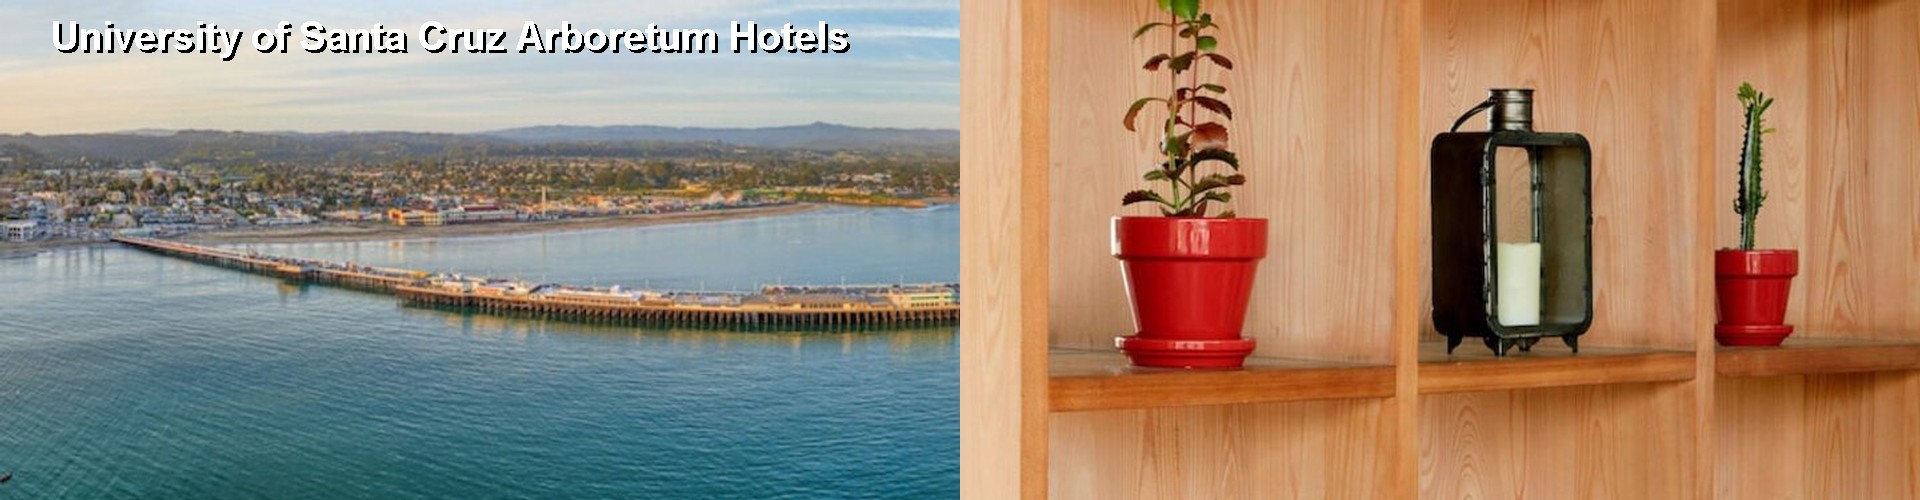 4 Best Hotels near University of Santa Cruz Arboretum